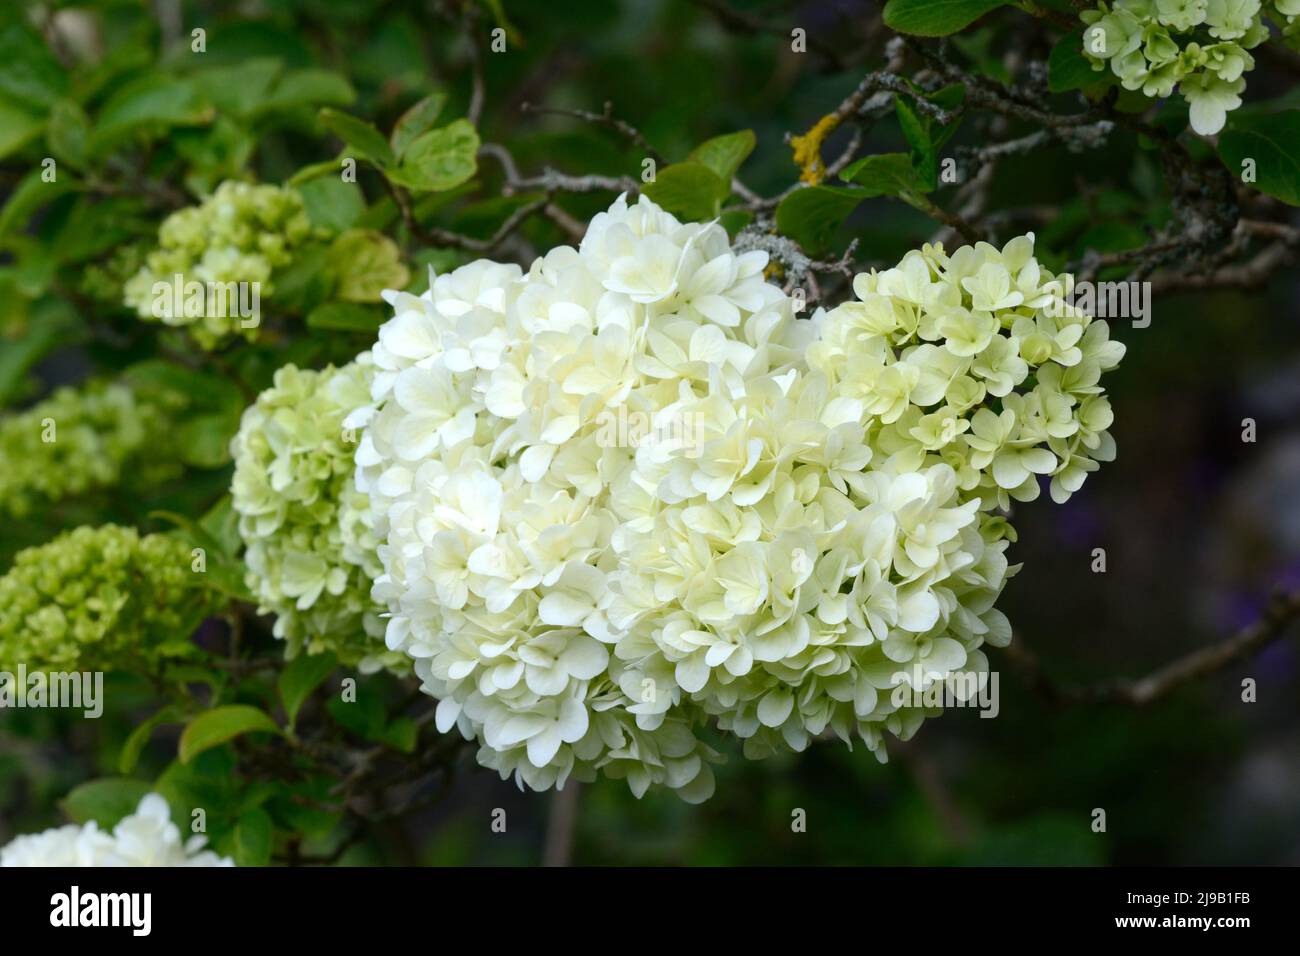 Viburnum macrocephalum Chinese snowball shrub laarge lime green flowers turning to white Stock Photo